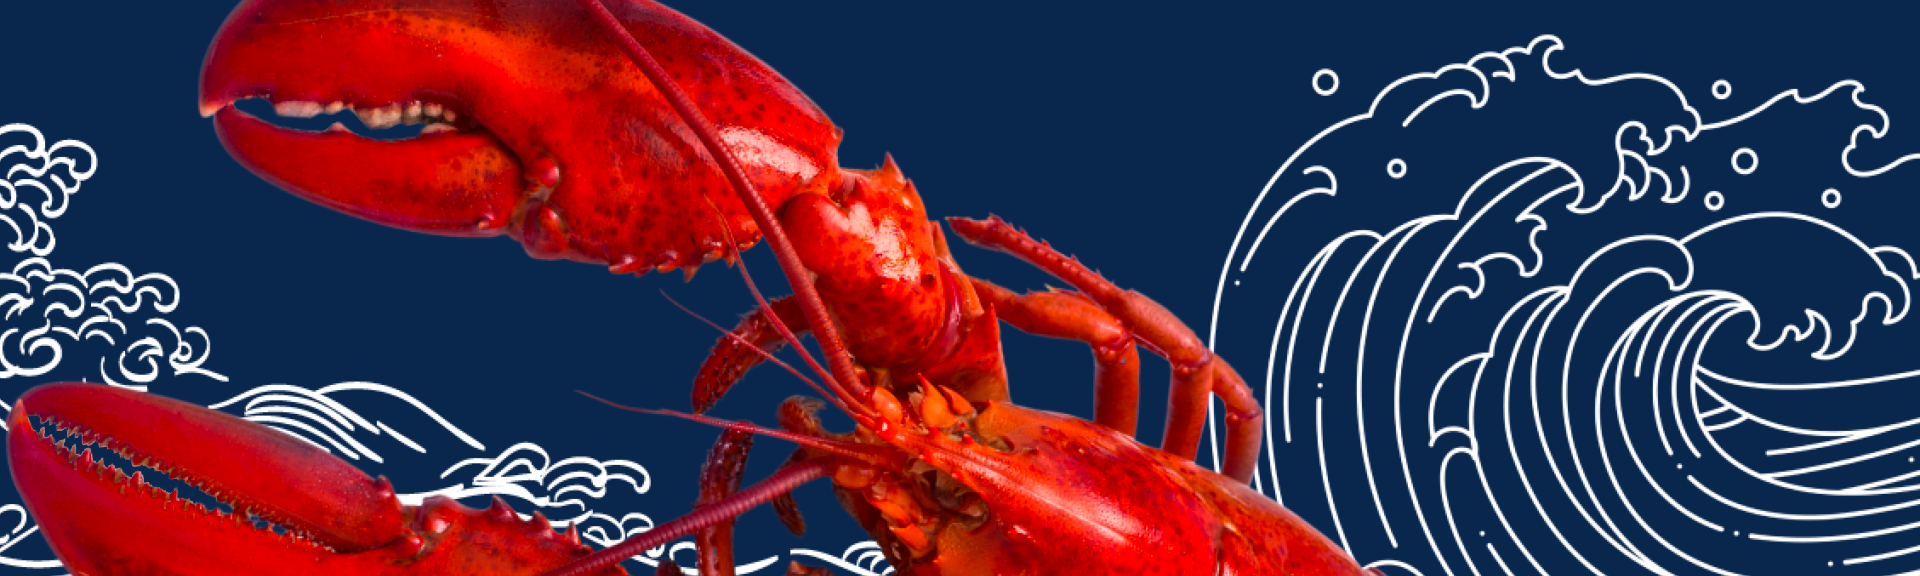 Maine Lobster Au Gratin recipe image